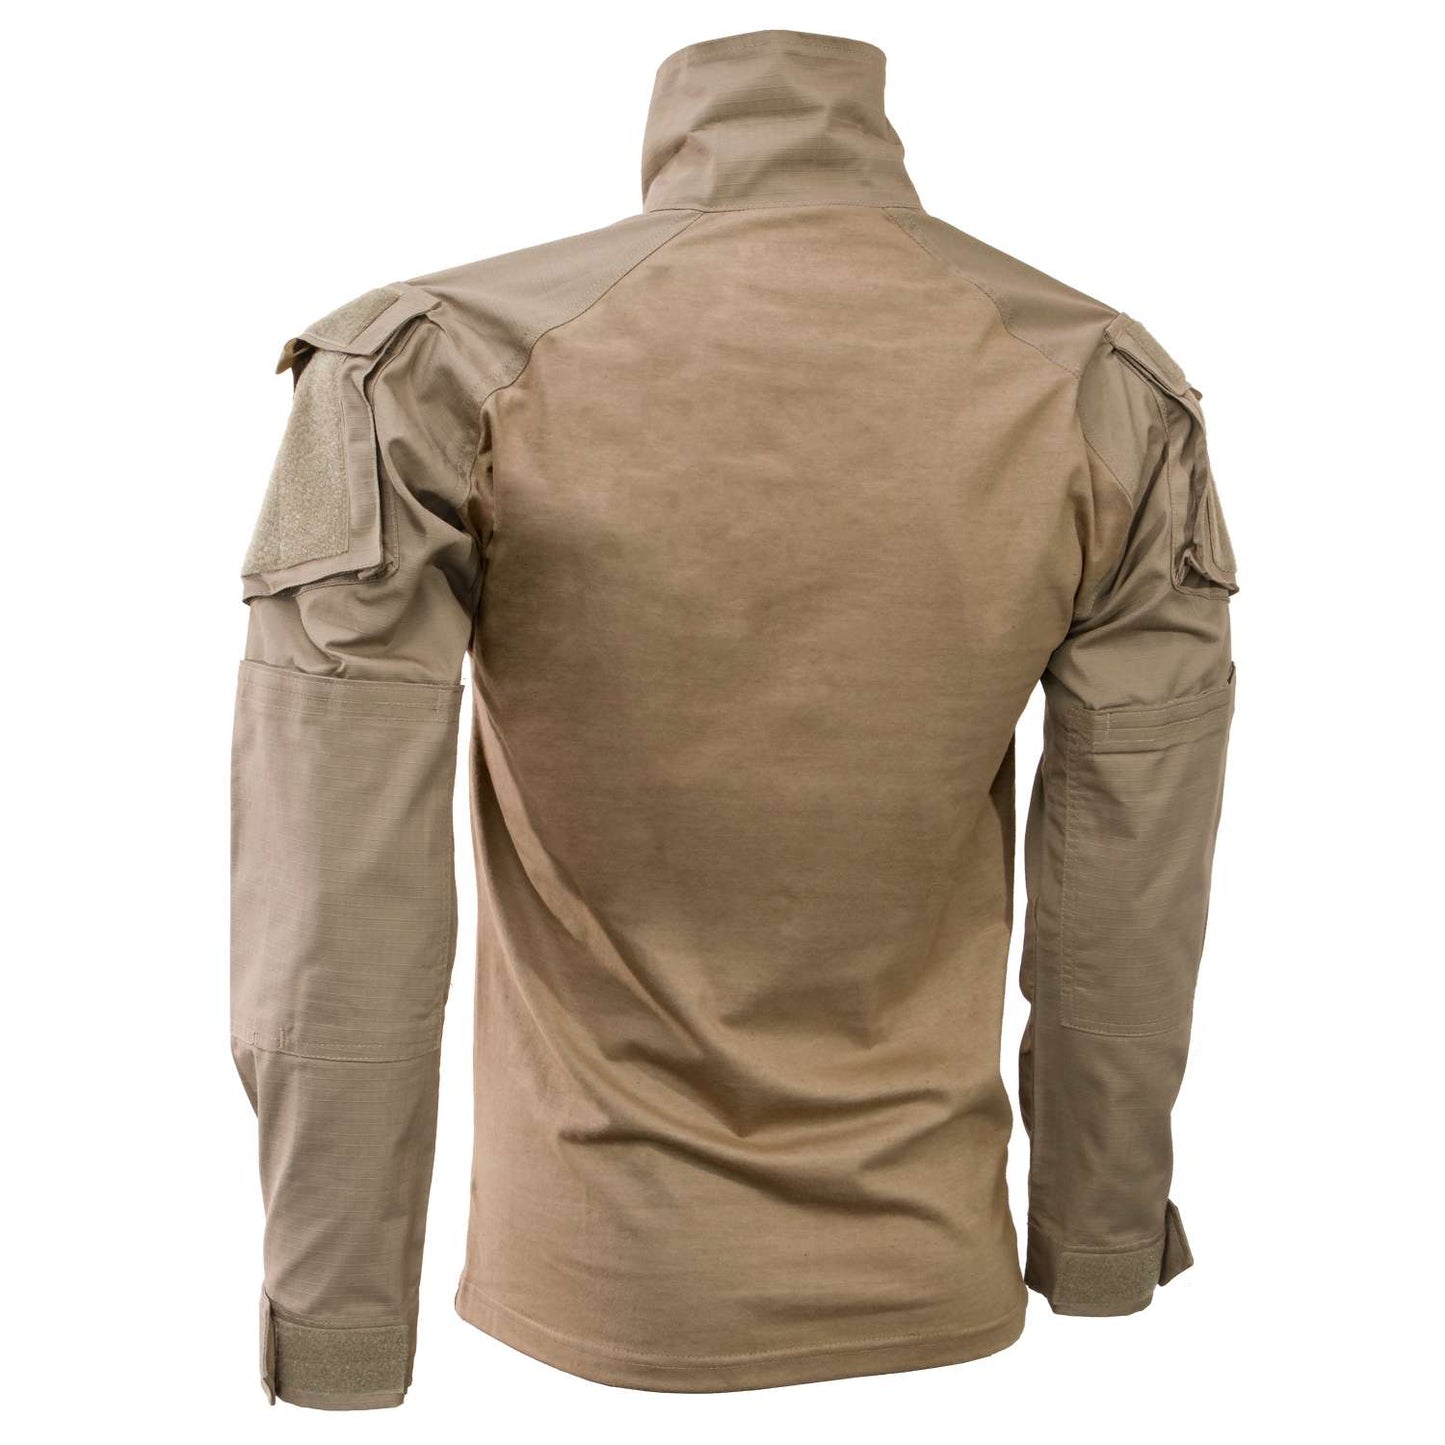 Tippmann Tactical TDU Shirt - Tan